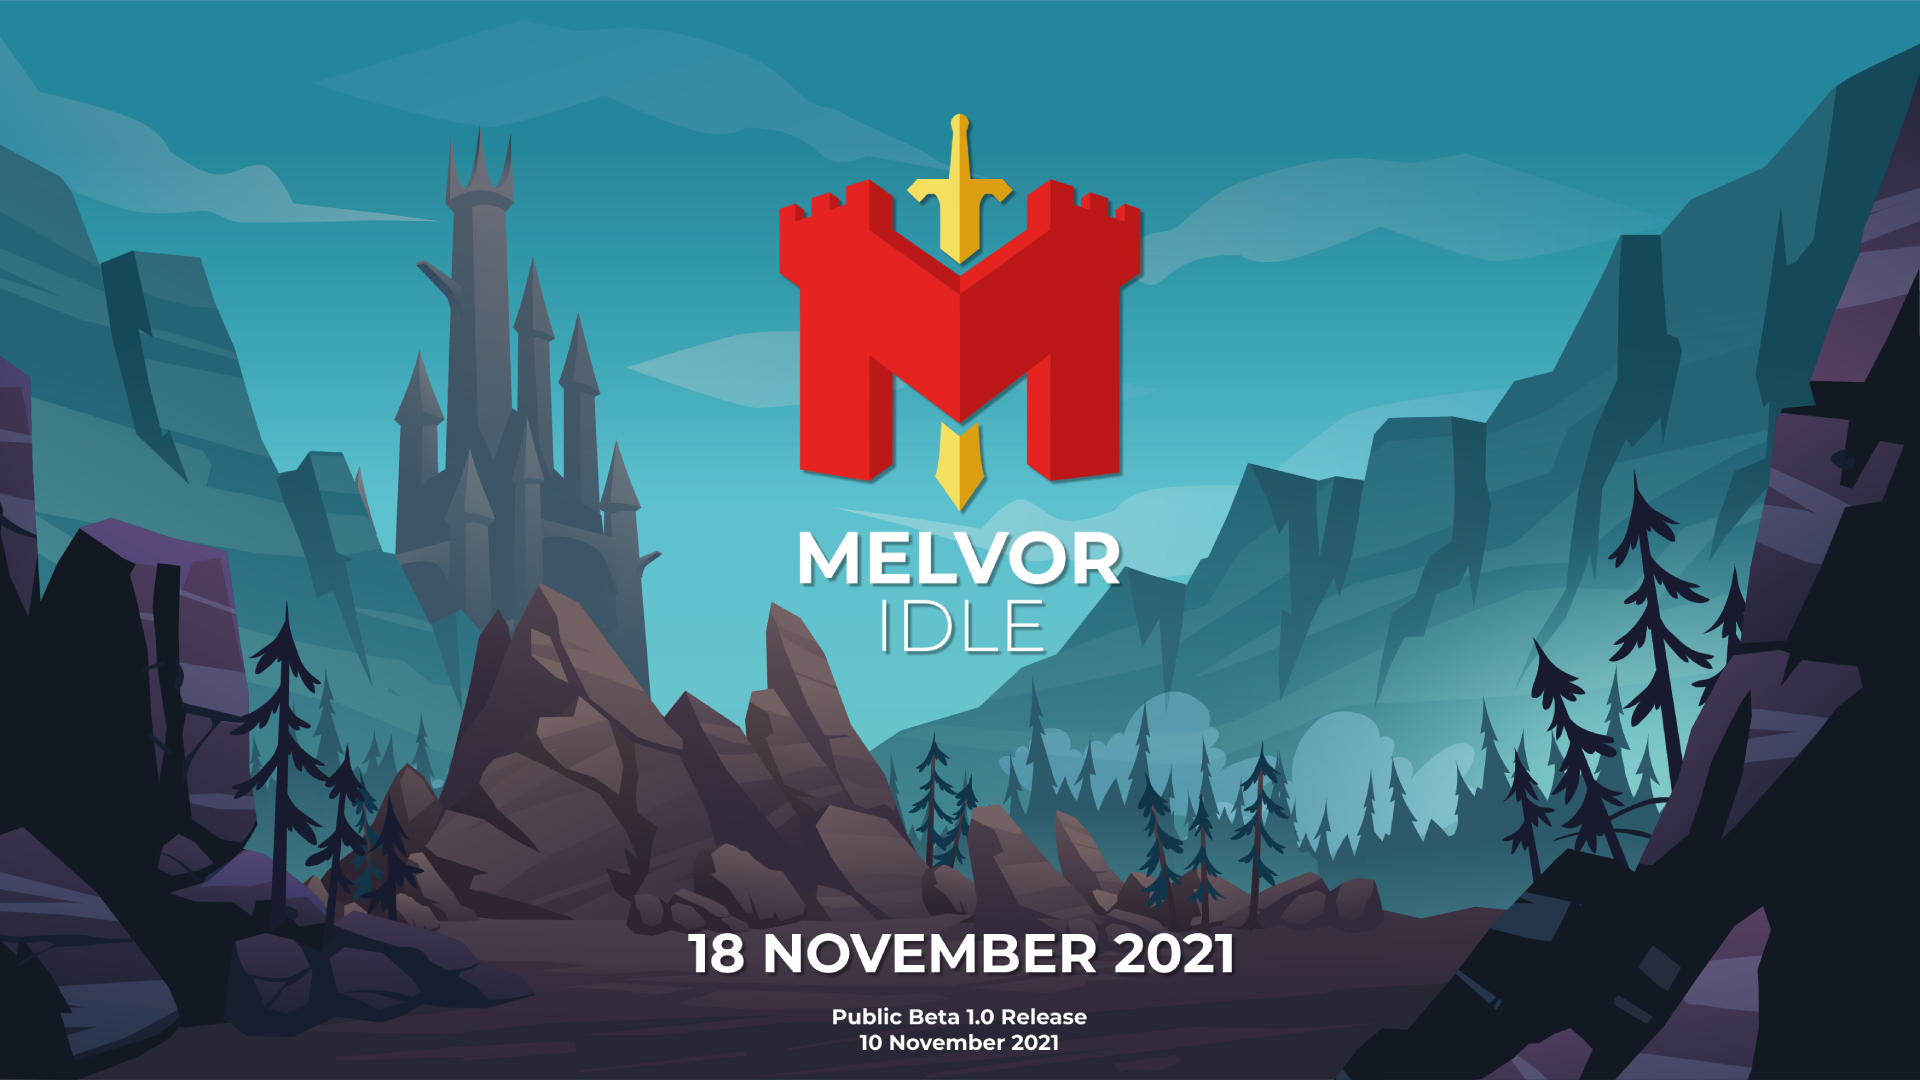 MELVOR IDLE NOVEMBER 2021